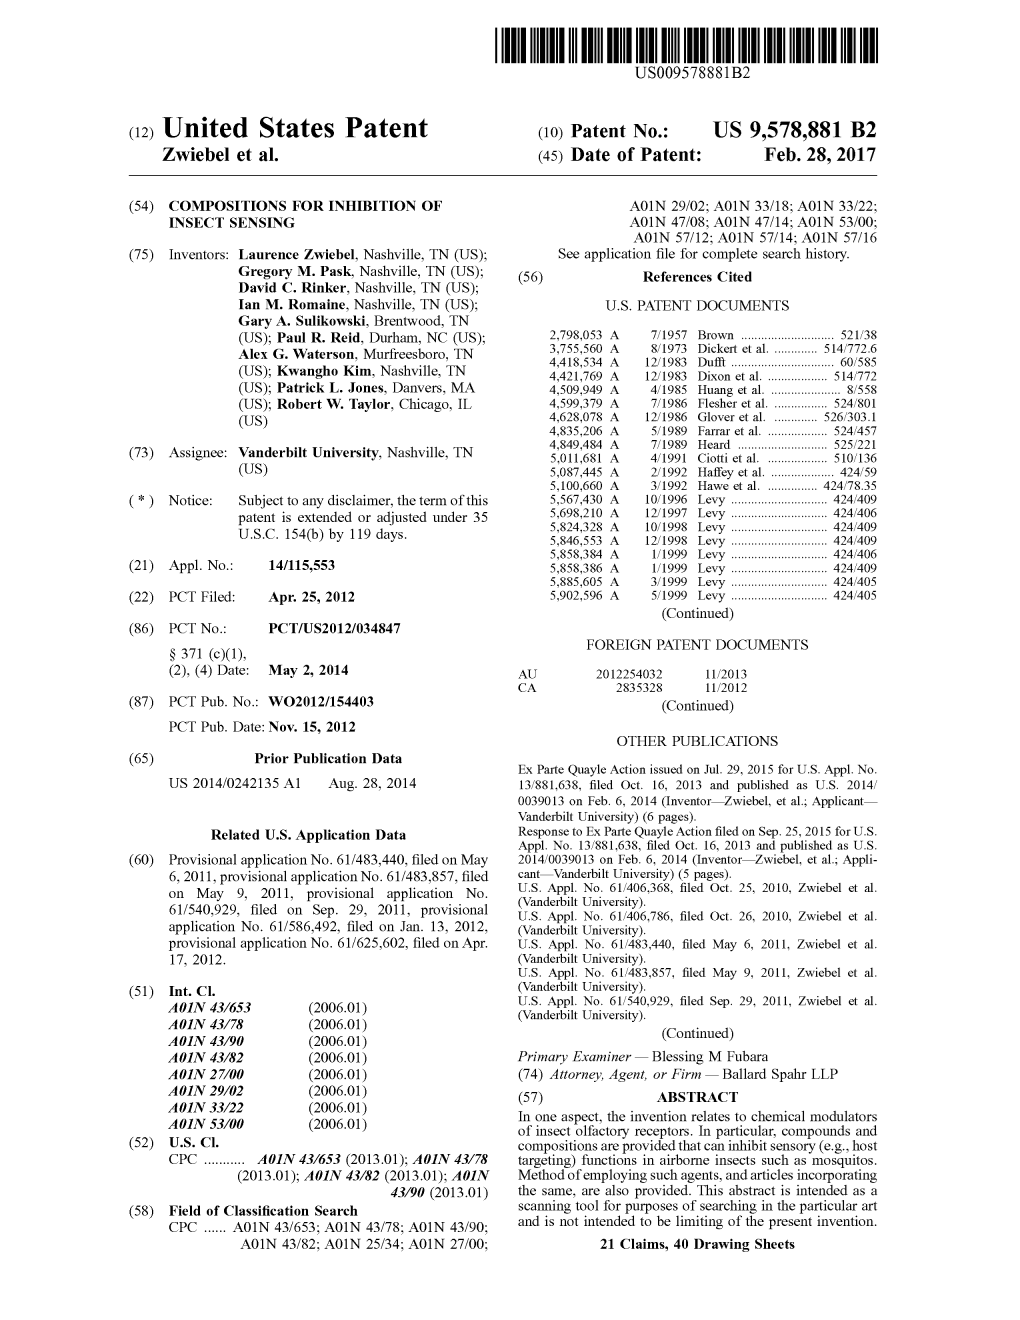 (12) United States Patent (10) Patent No.: US 9,578,881 B2 Zwiebel Et Al